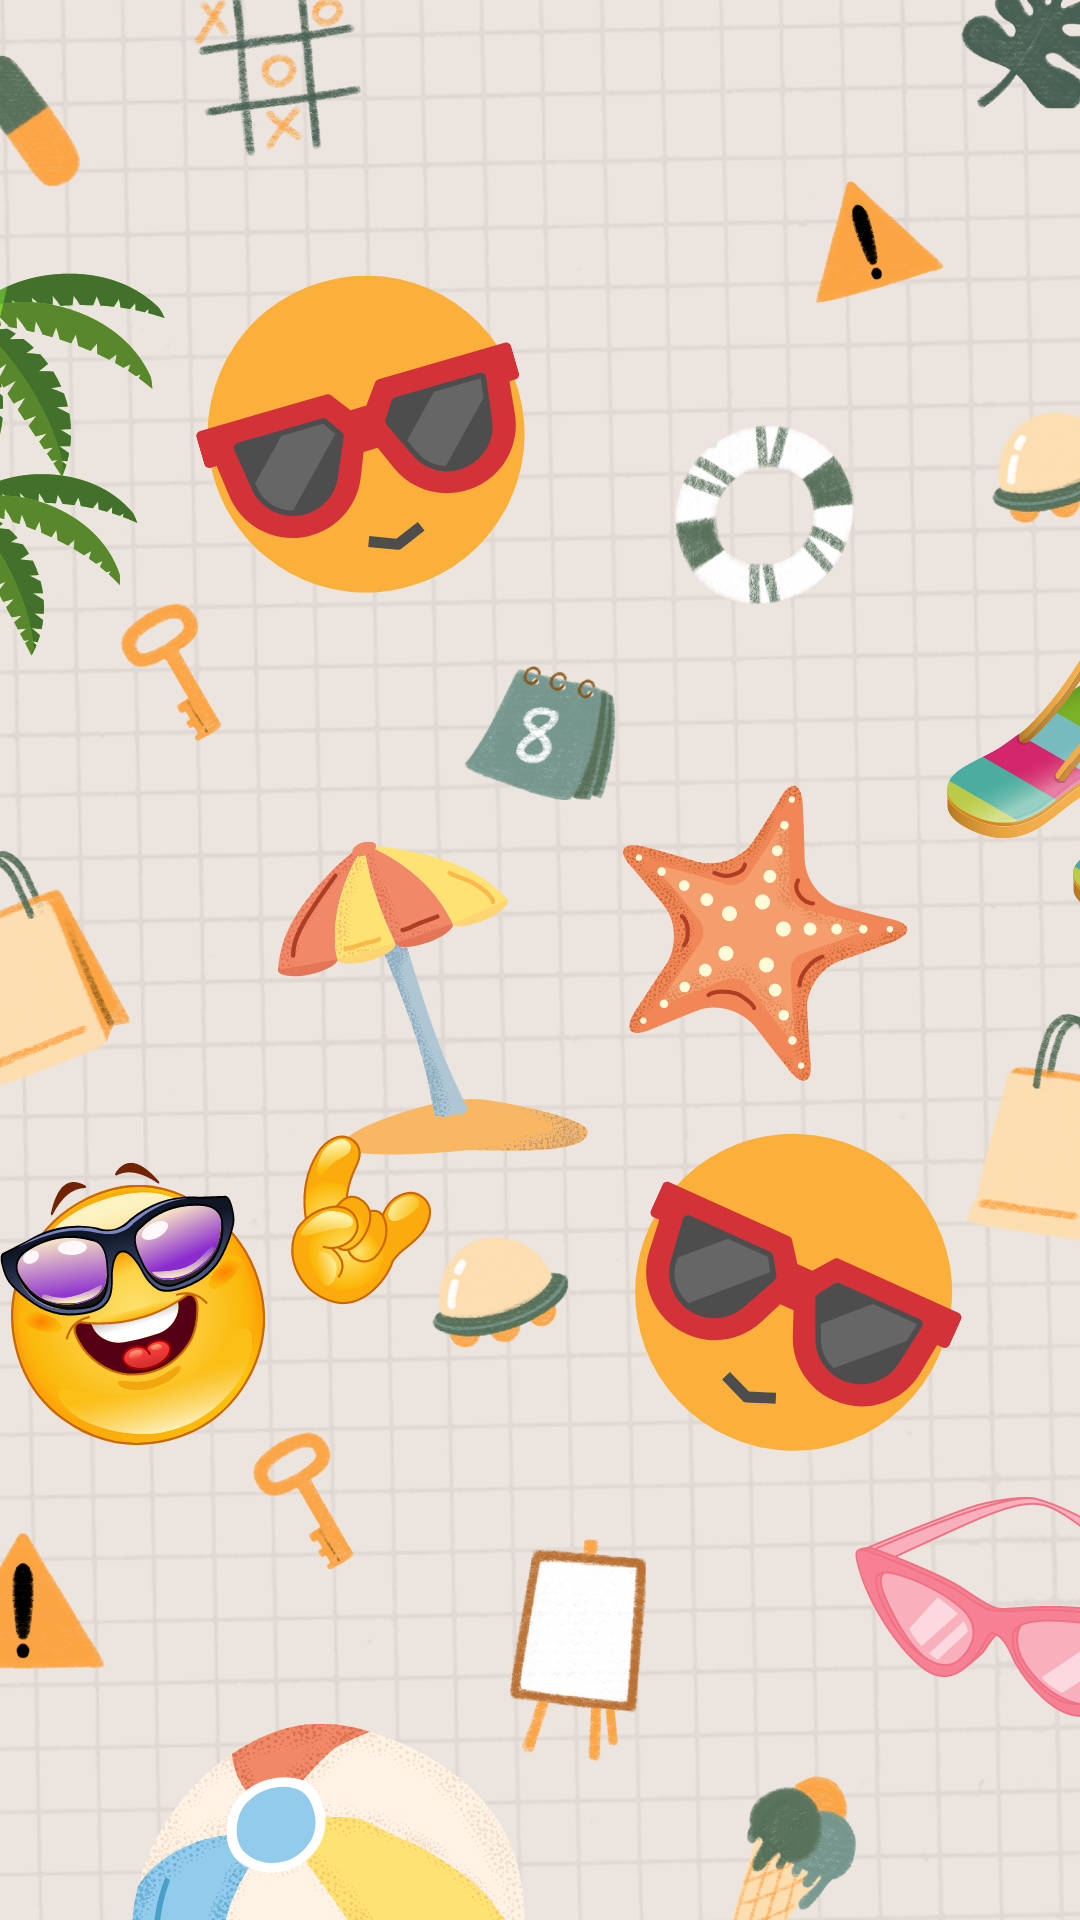 Emoji 1080X1920 Wallpaper and Background Image